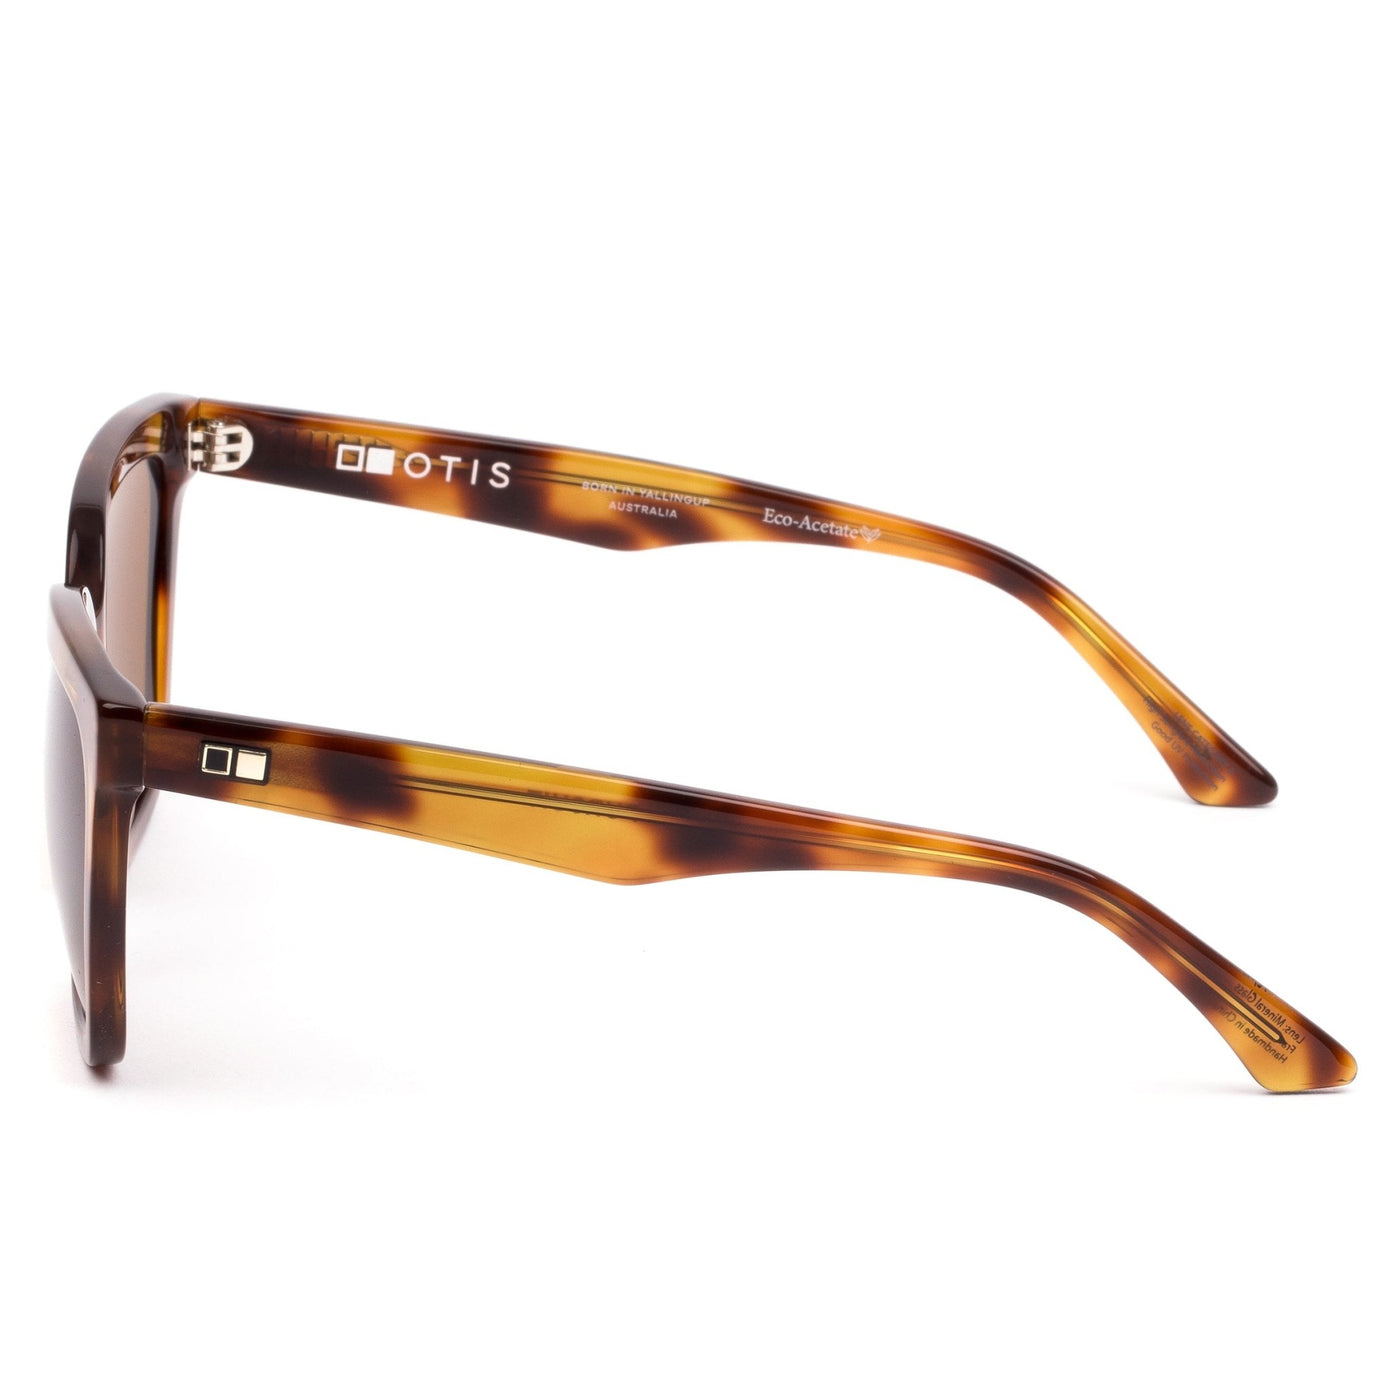 Tort sustainable sunglasses by OTIS eyewear called Pursuit in Eco Havana Zinnia